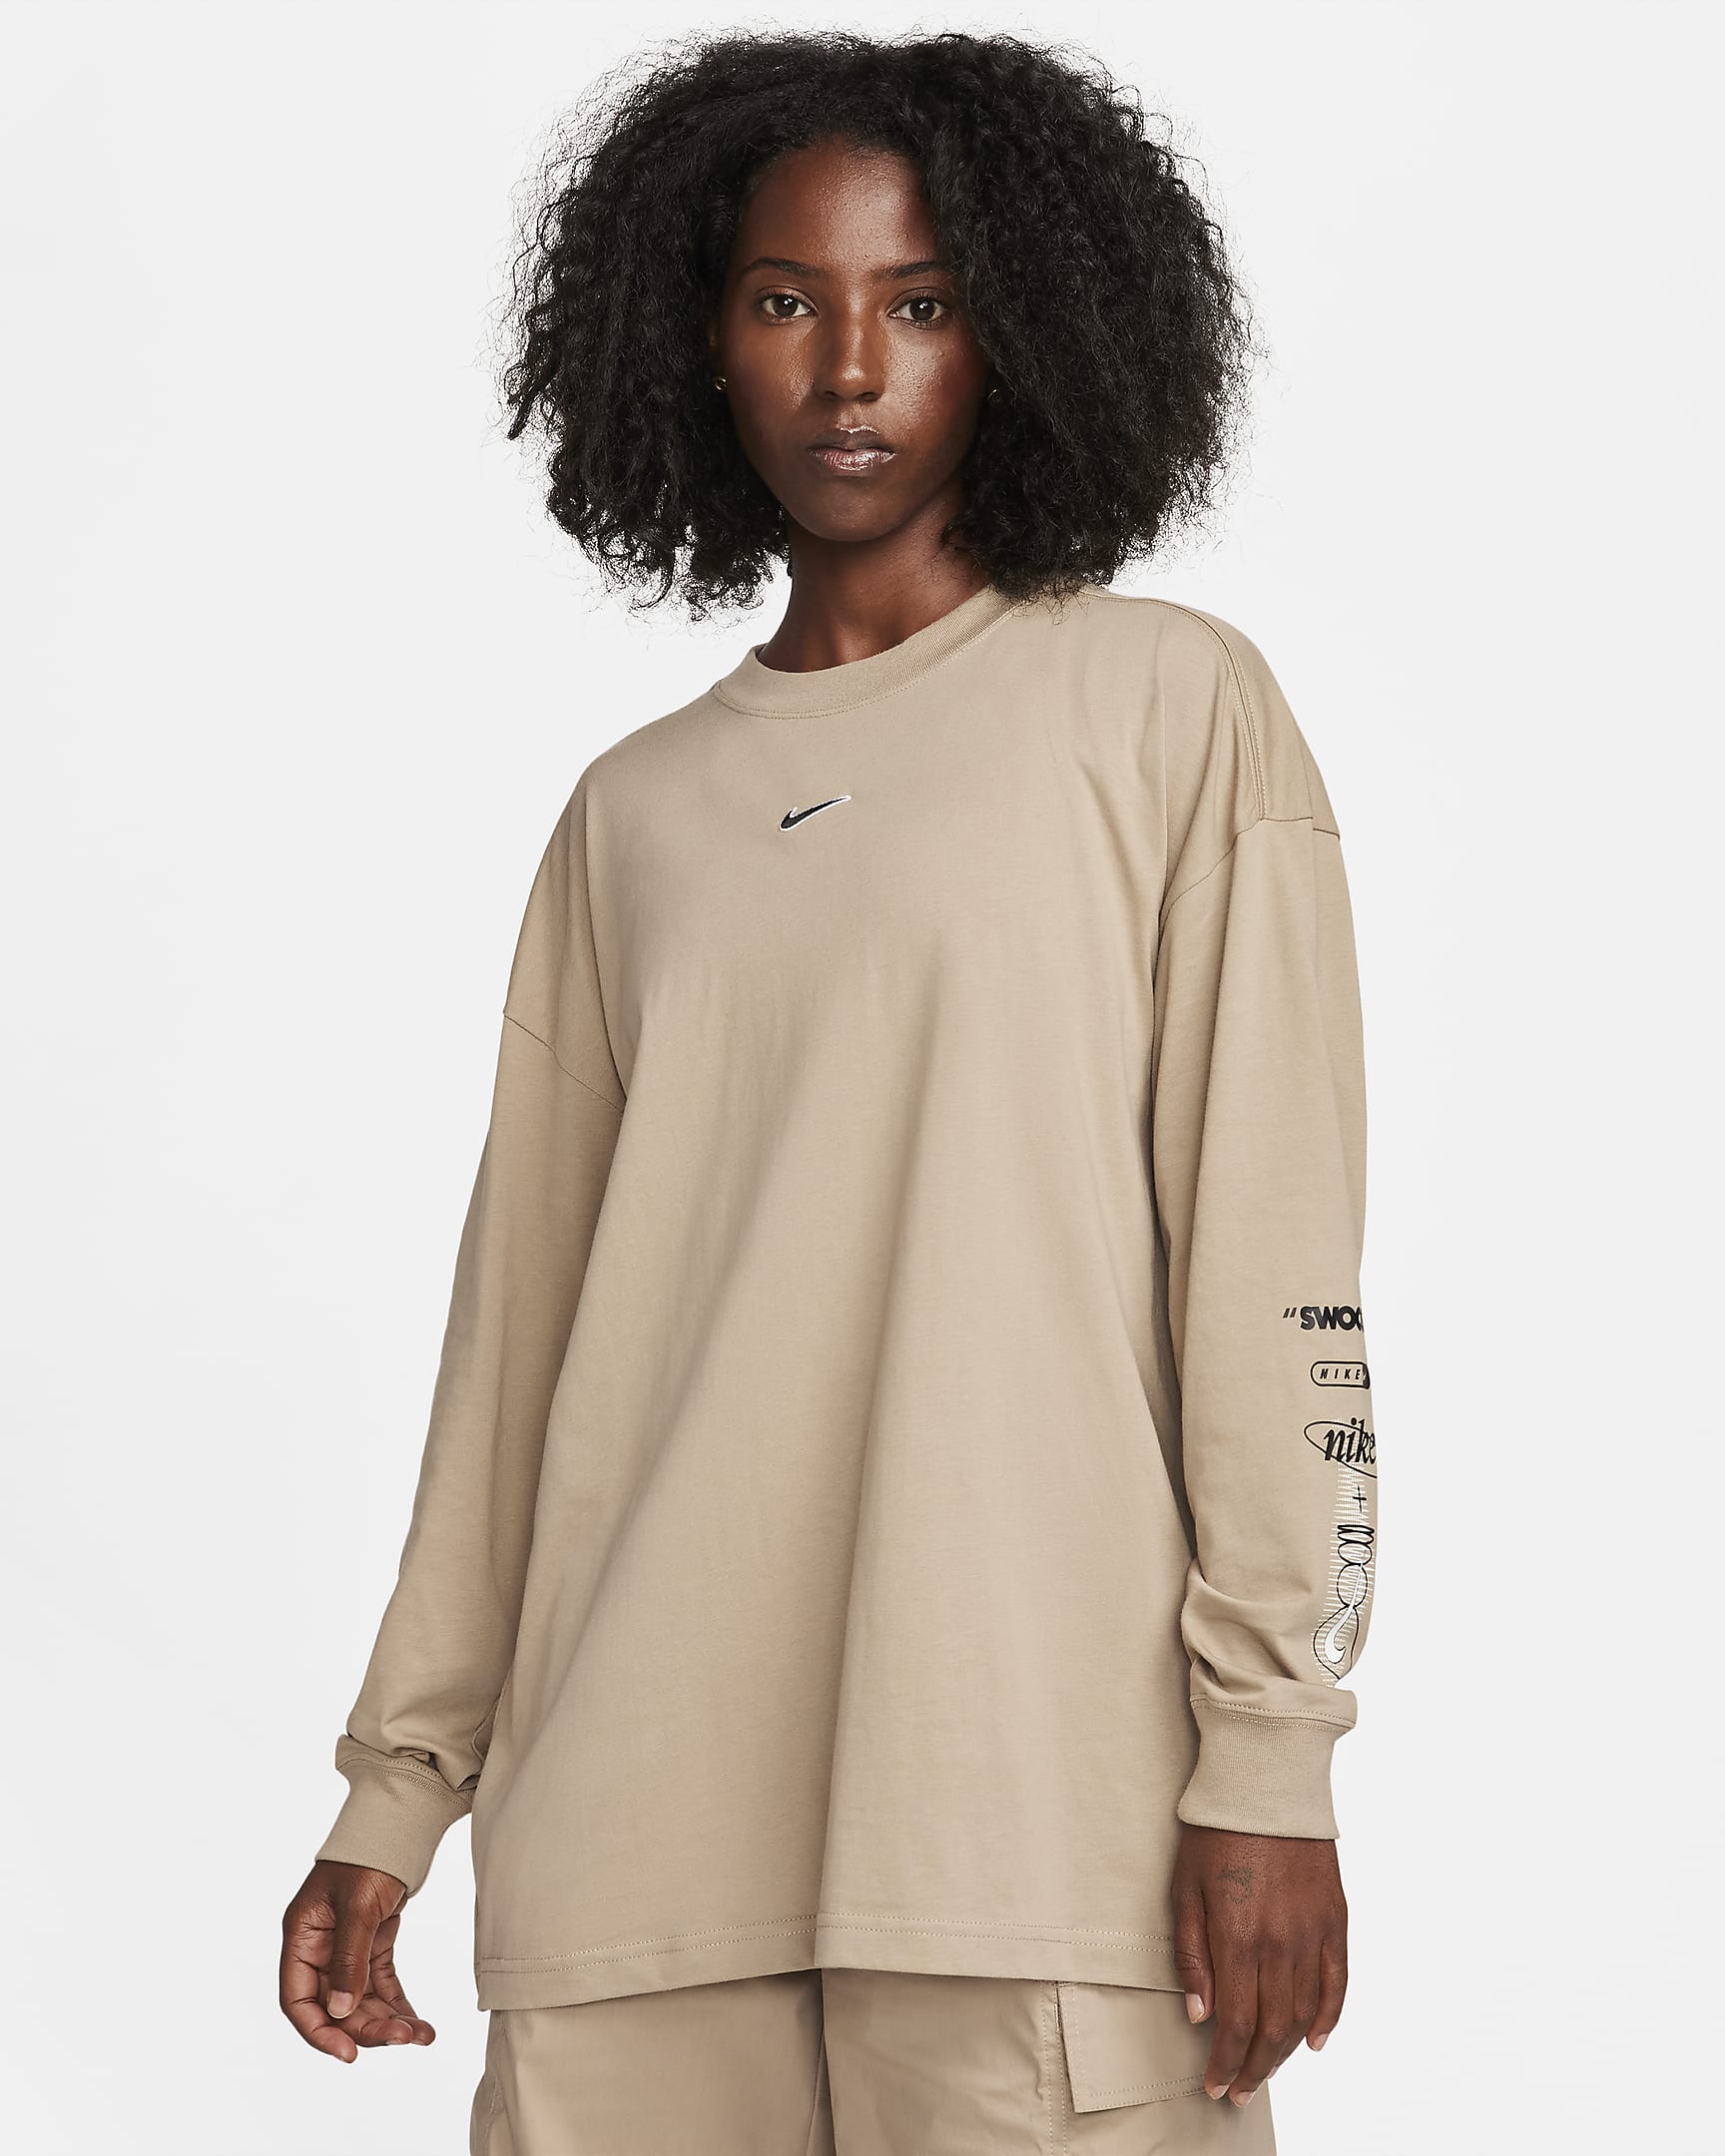 Nike Sportswear Women's Long-Sleeve T-Shirt. Nike CH